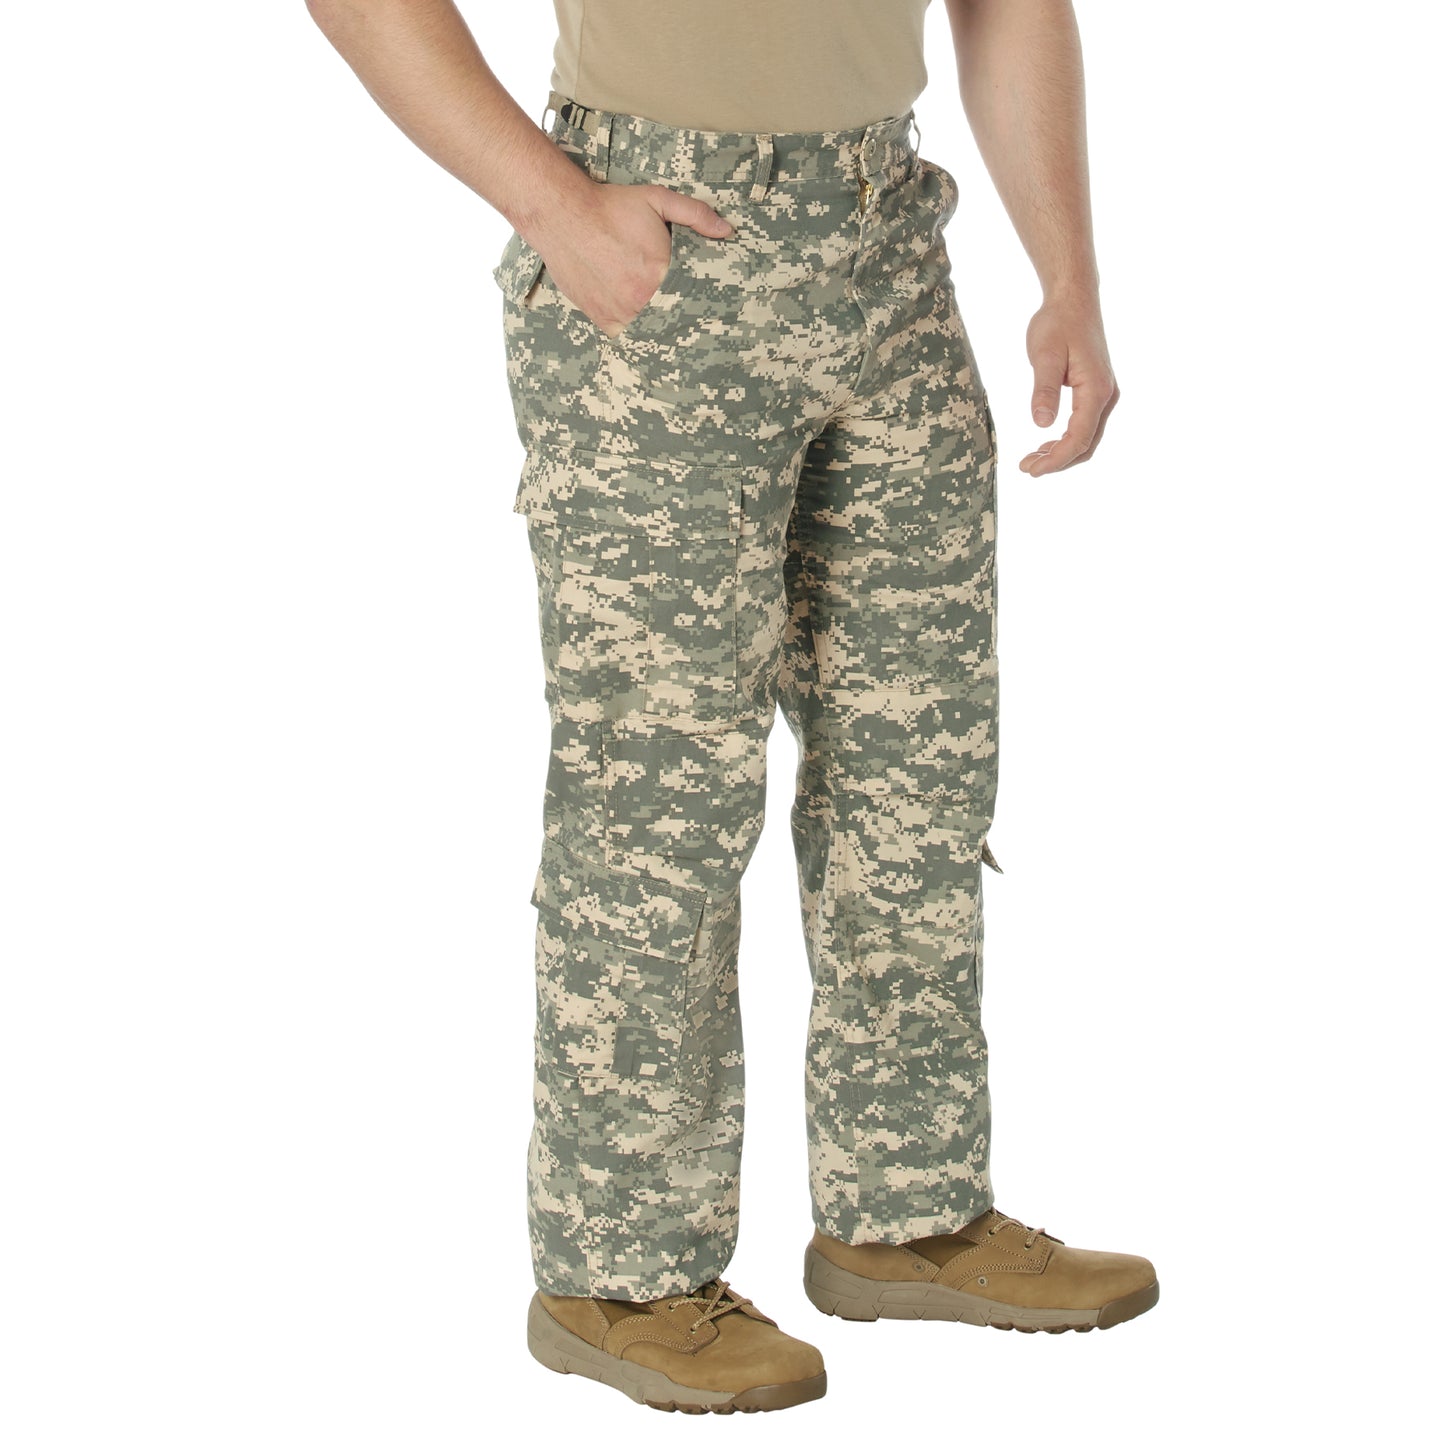 Rothco Vintage Camo Paratrooper Fatigue Pants - ACU Digital Camo